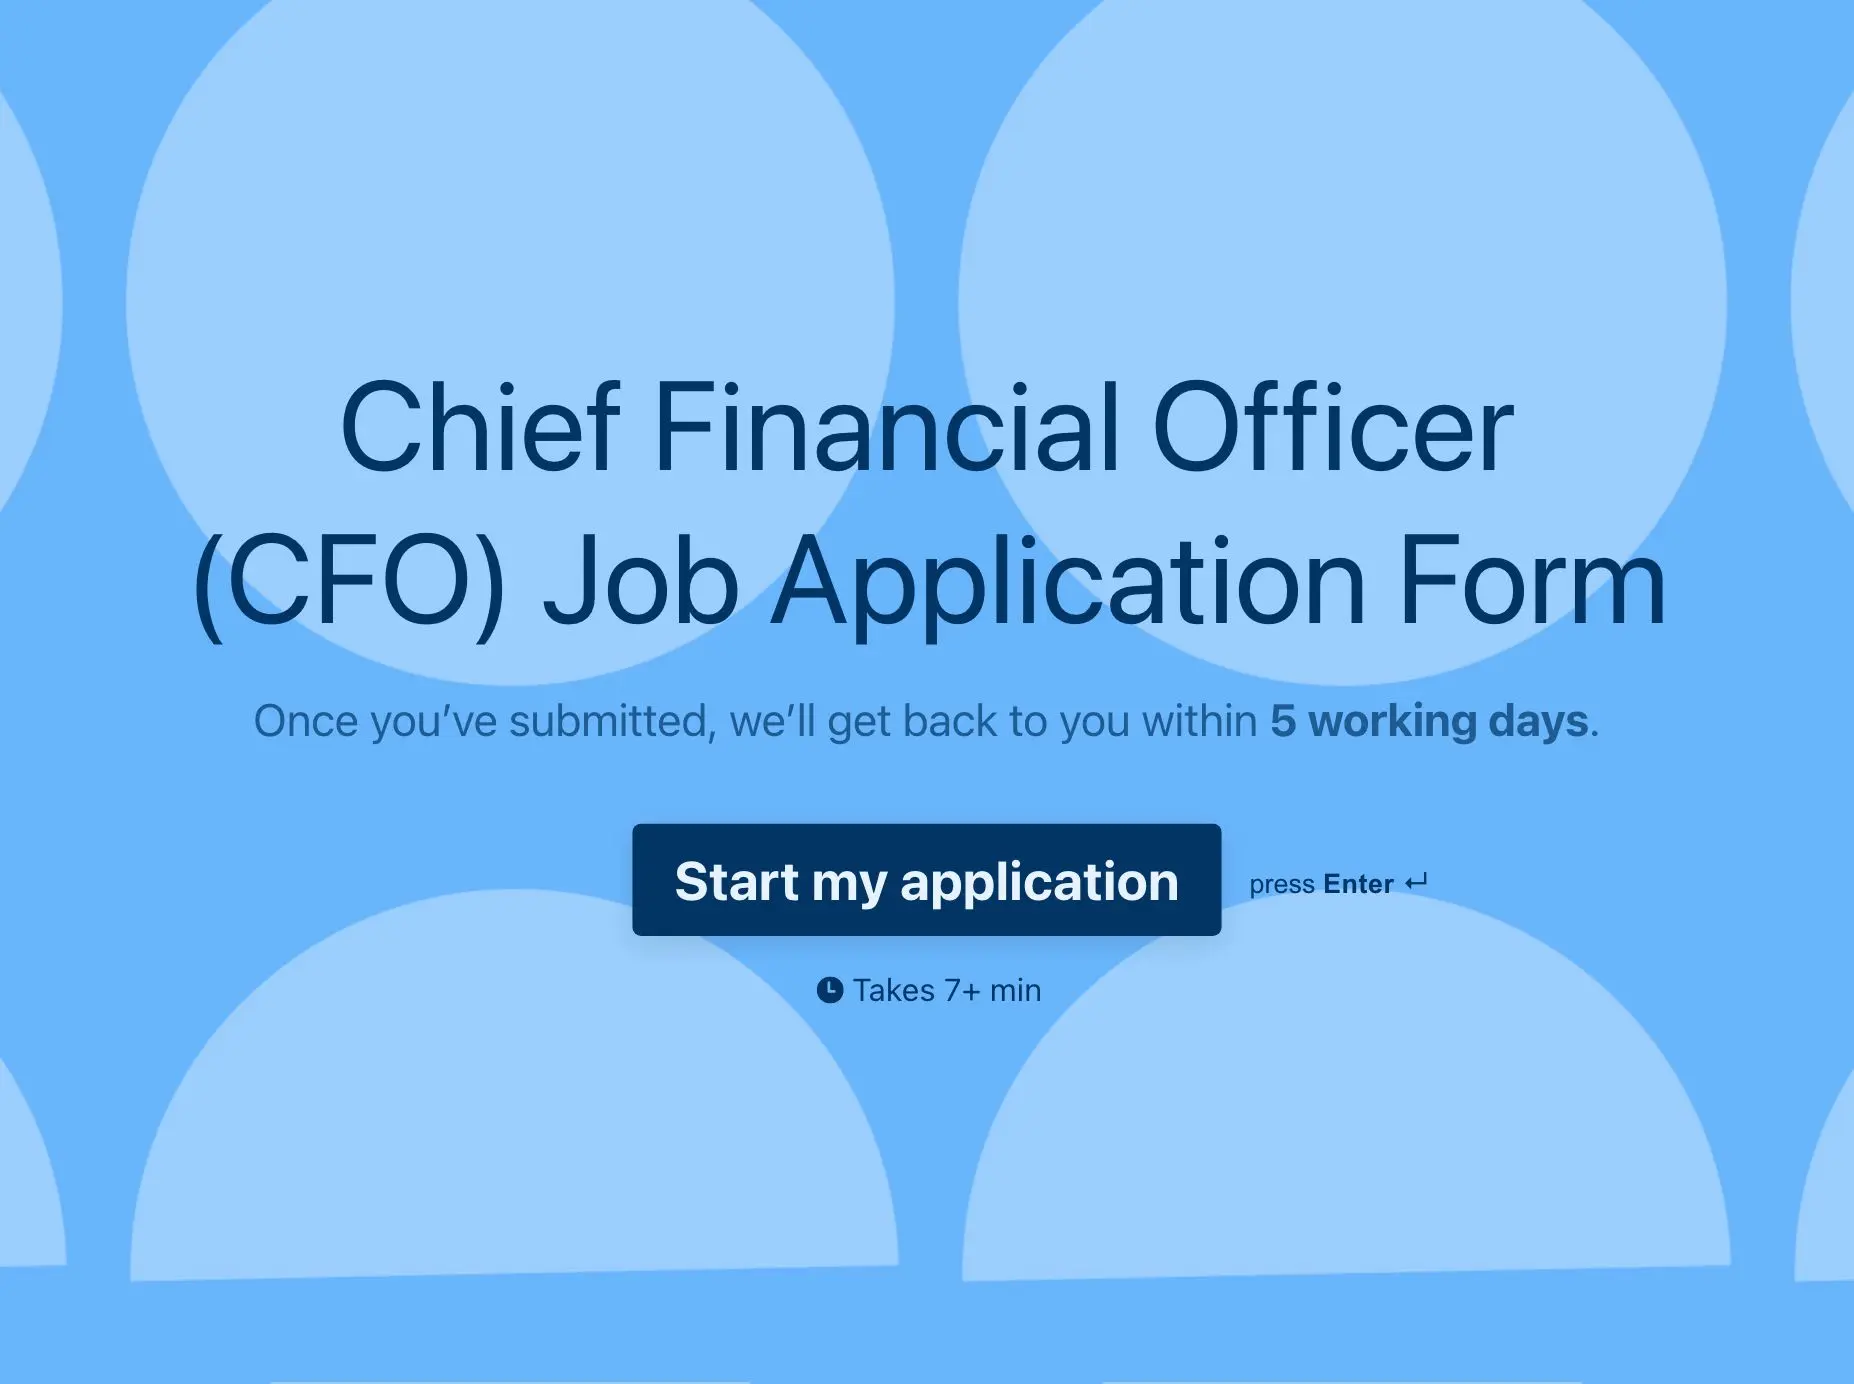 Chief Financial Officer (CFO) Job Application Form Template Hero